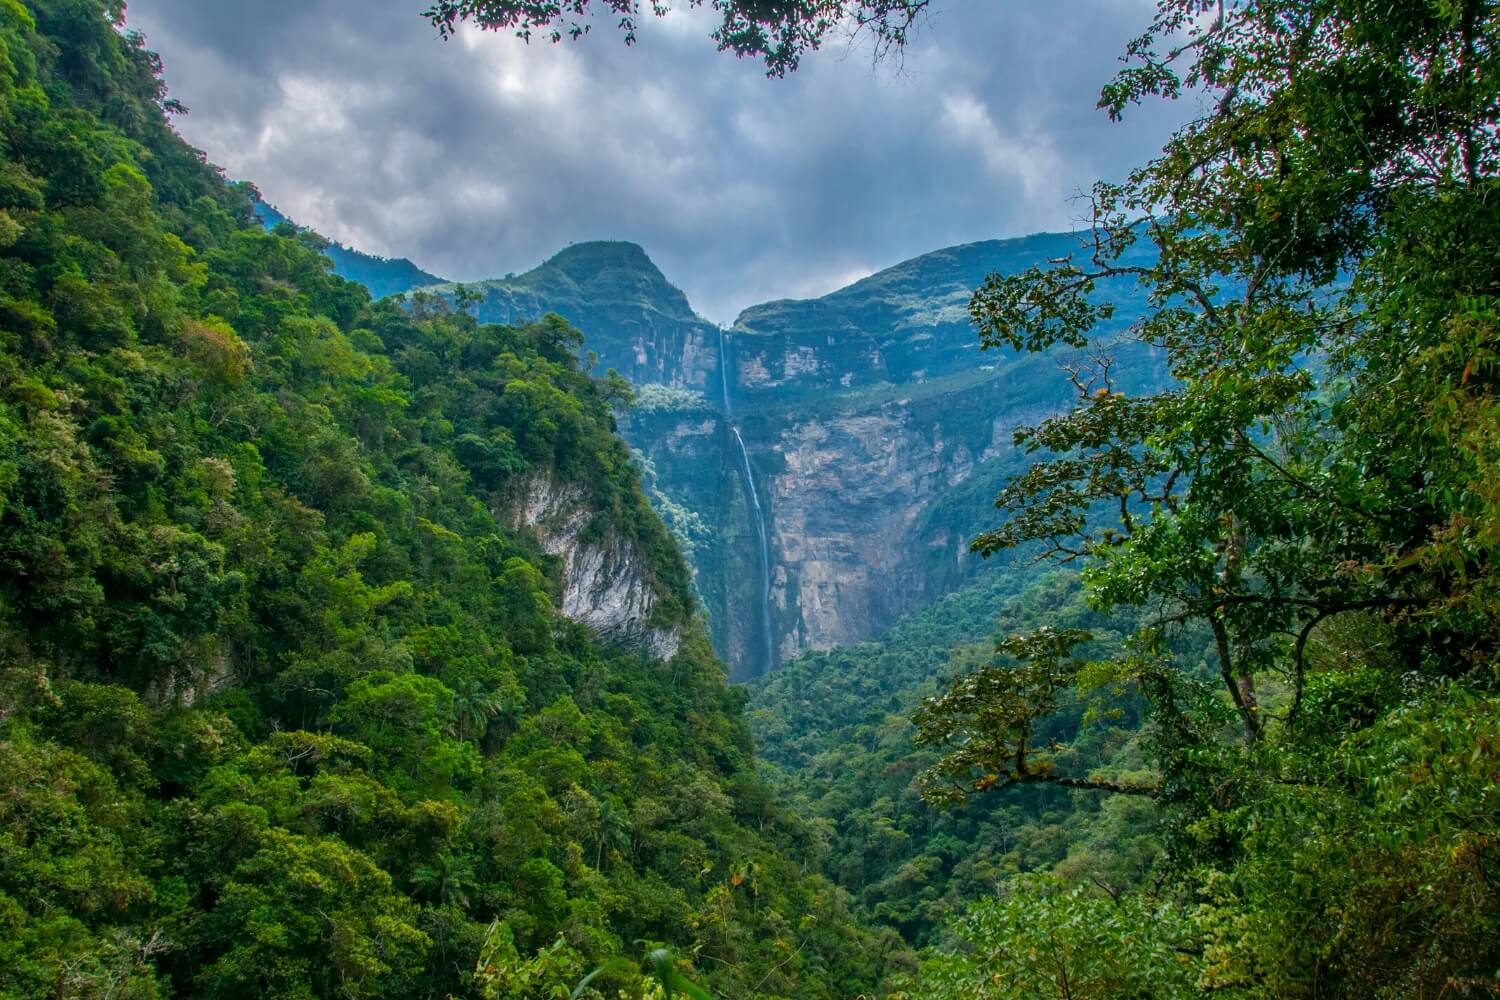 Gocta Waterfall: Among the main attractions of Amazonas